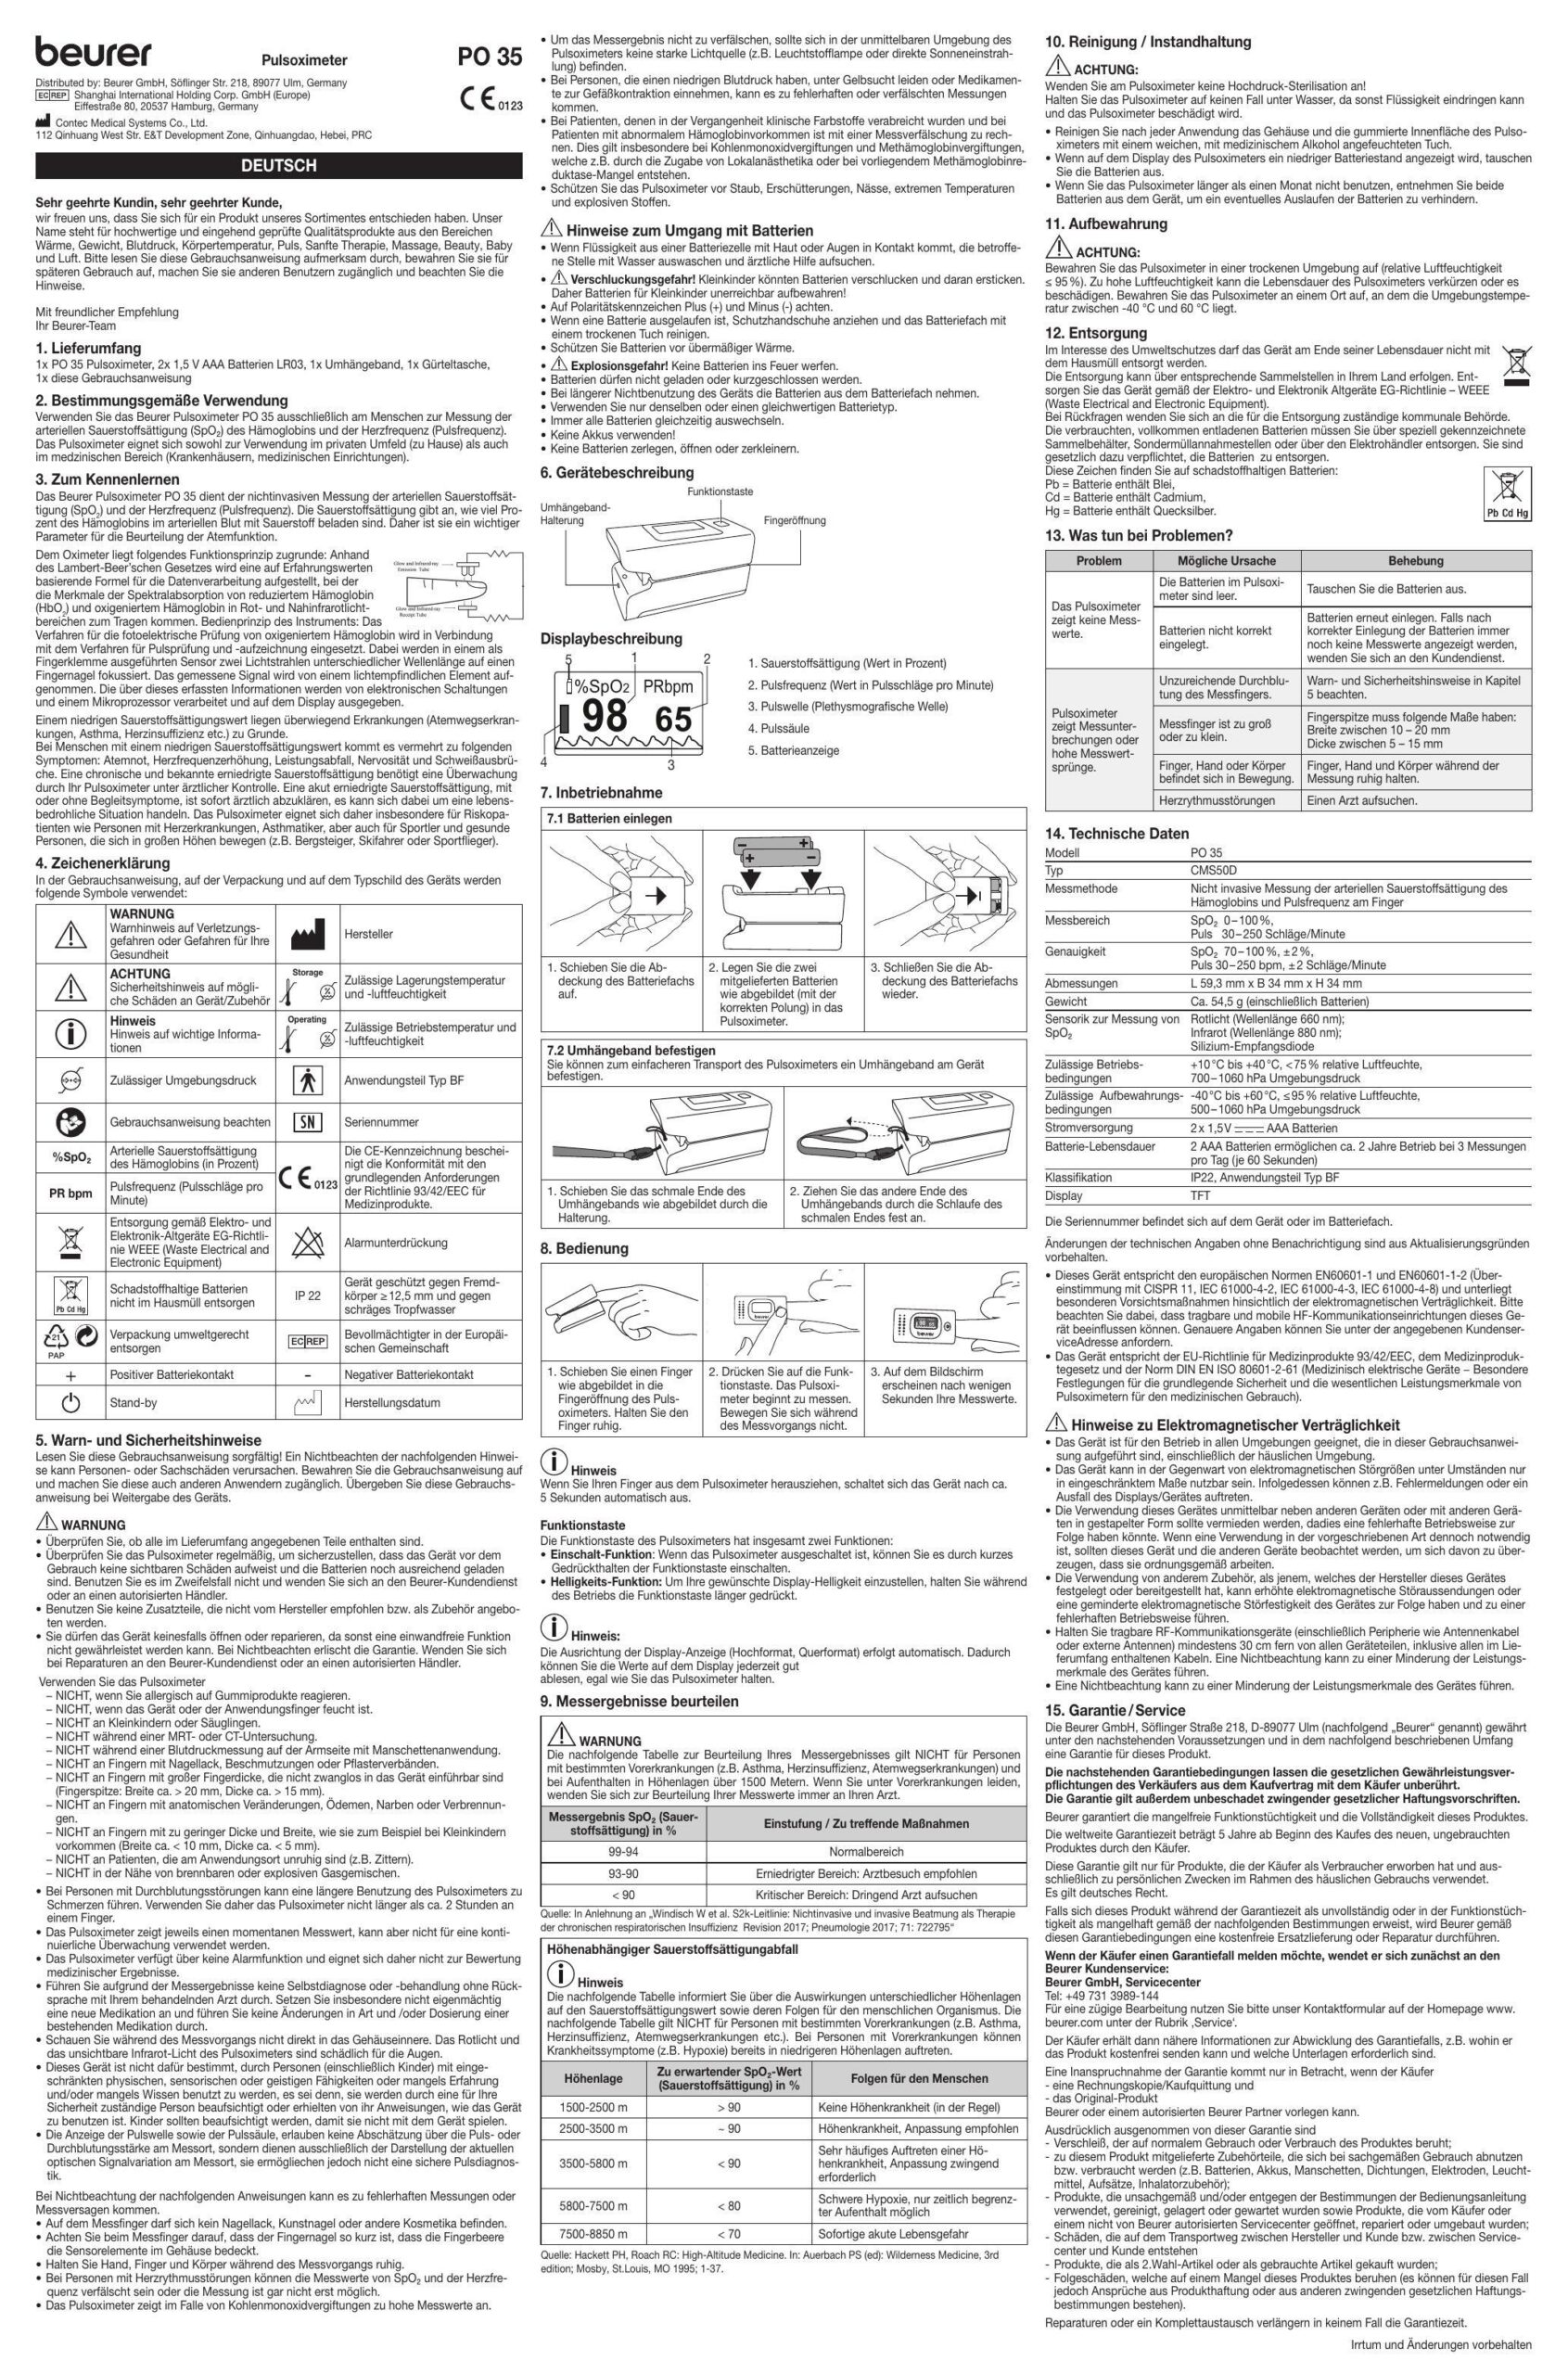 beurer-po-35-pulse-oximeter-user-manual.pdf